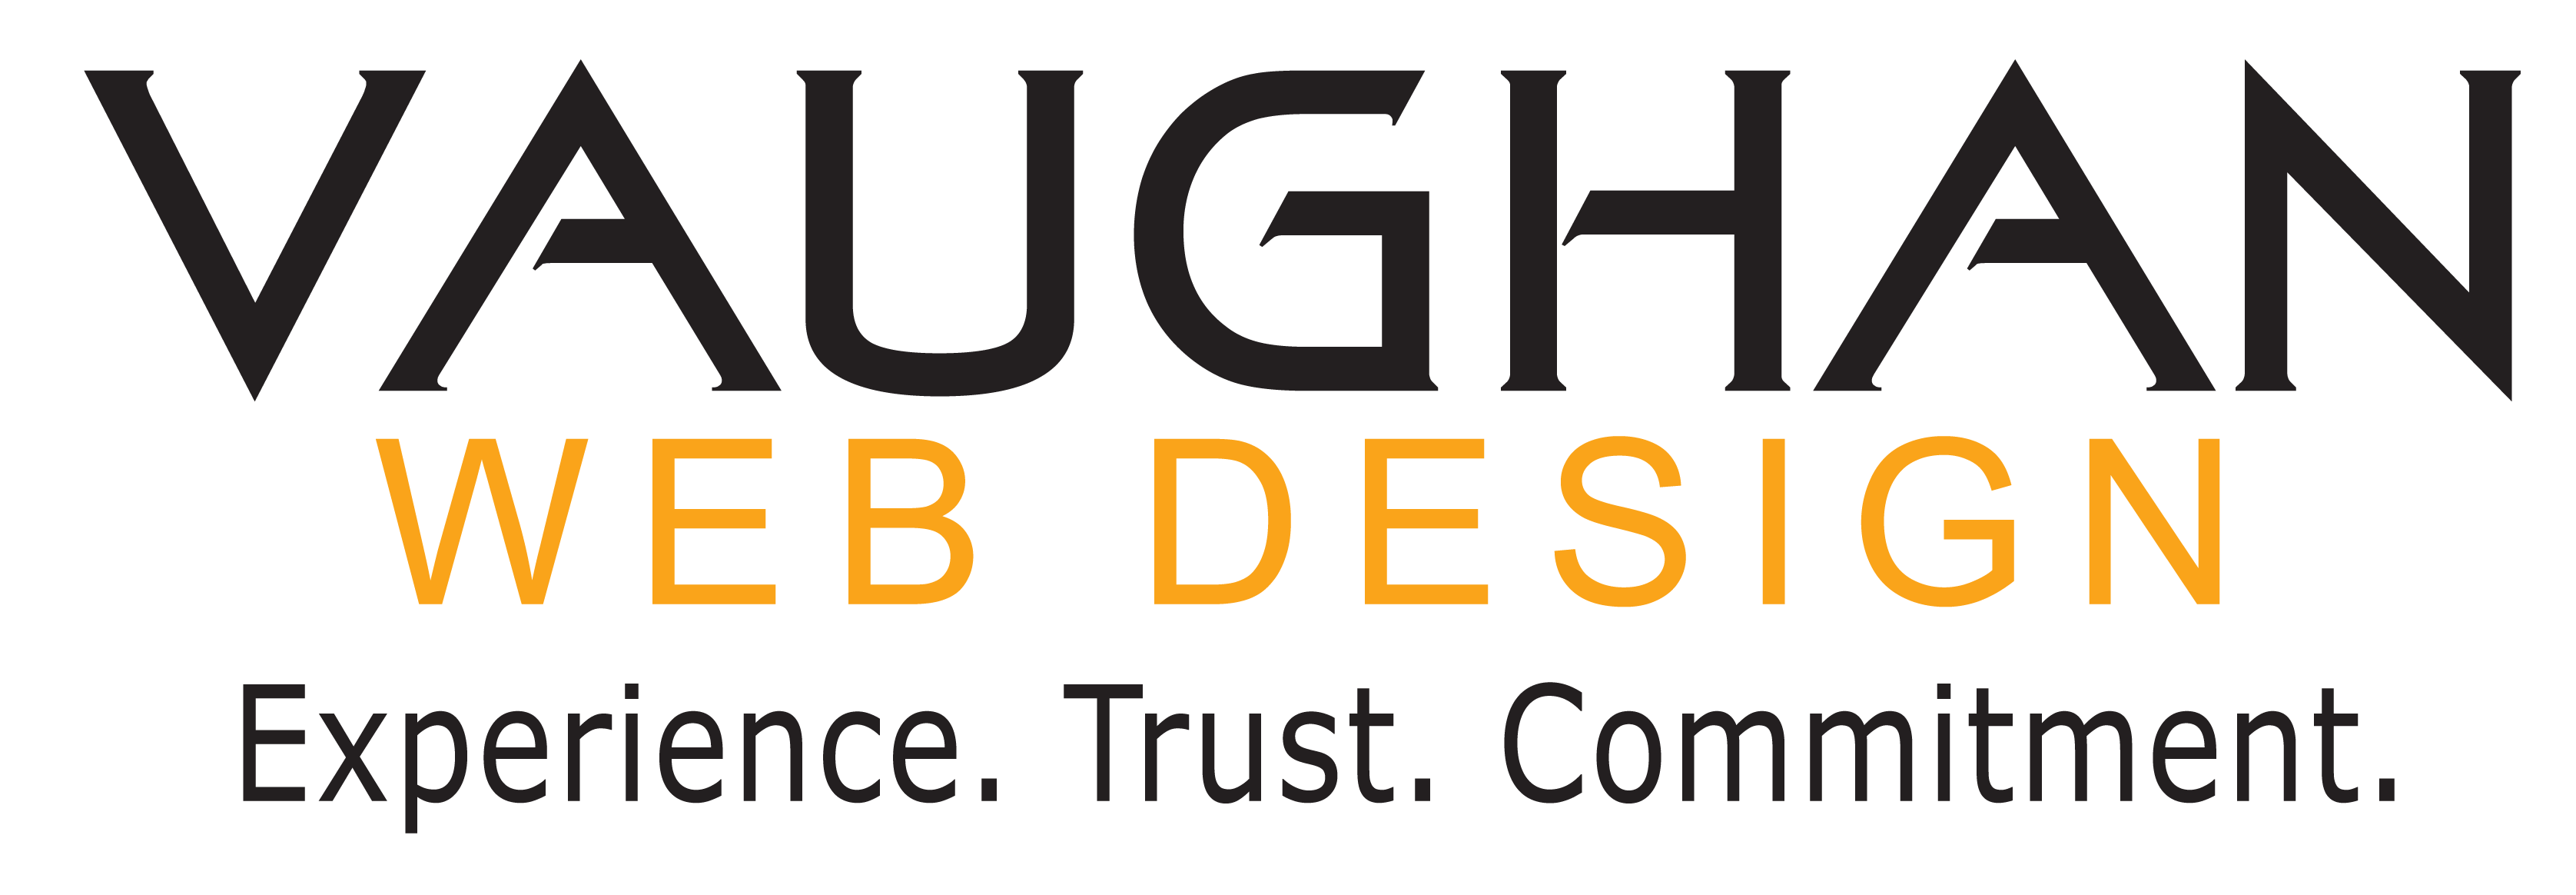 Vaughan Web Design Inc.